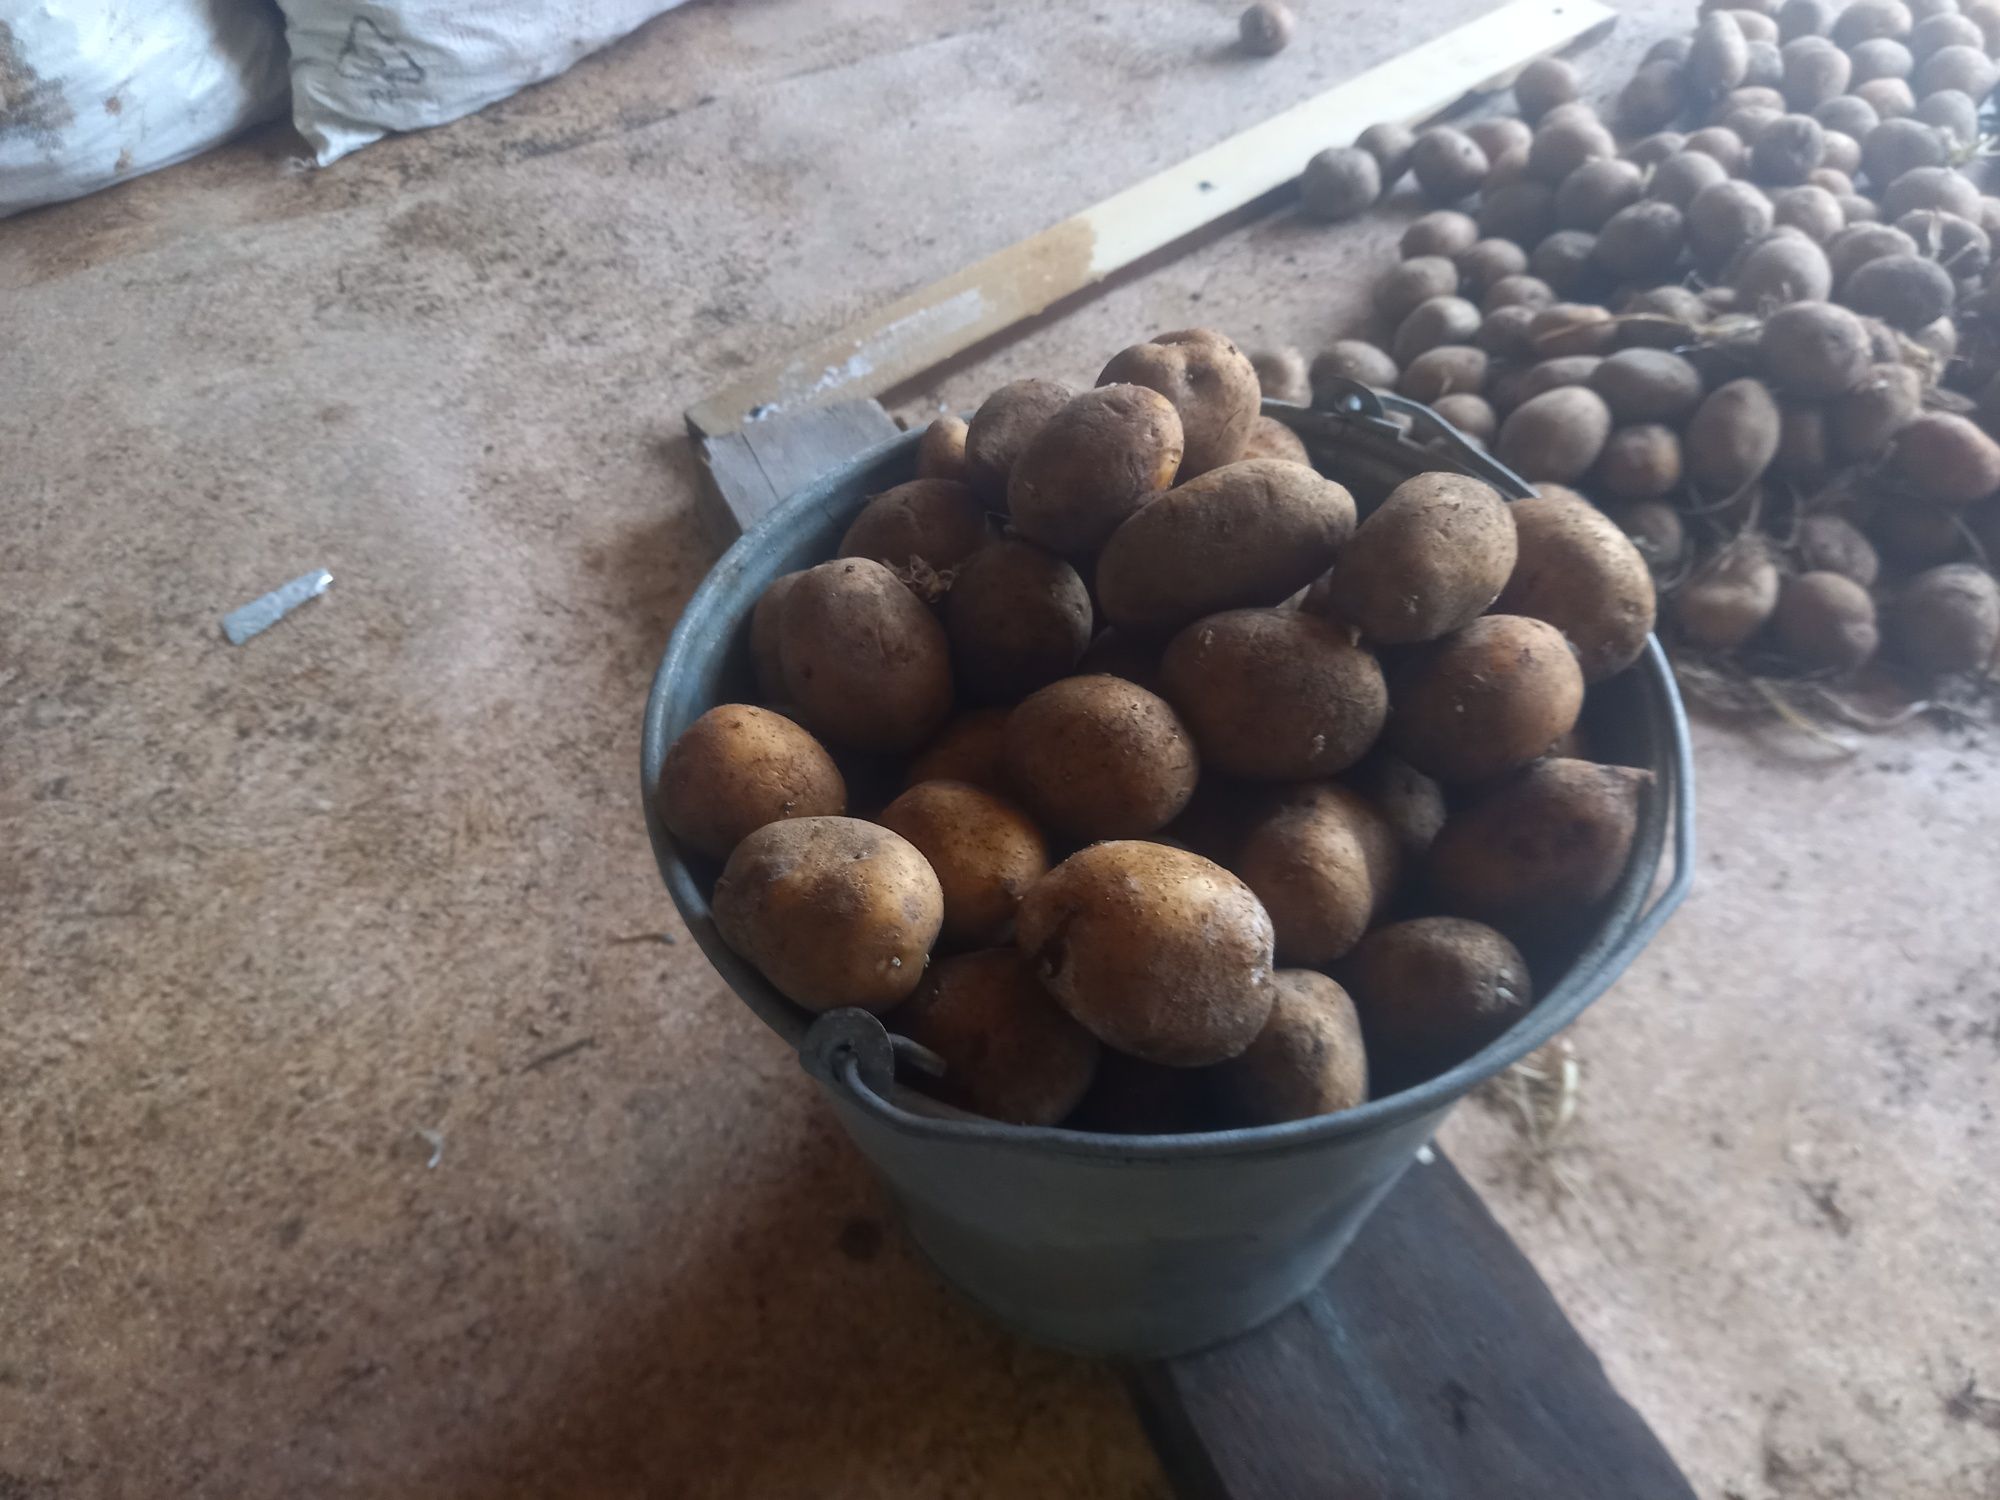 Семейная картошка  местная  армовирка ведро железное  1100 тг